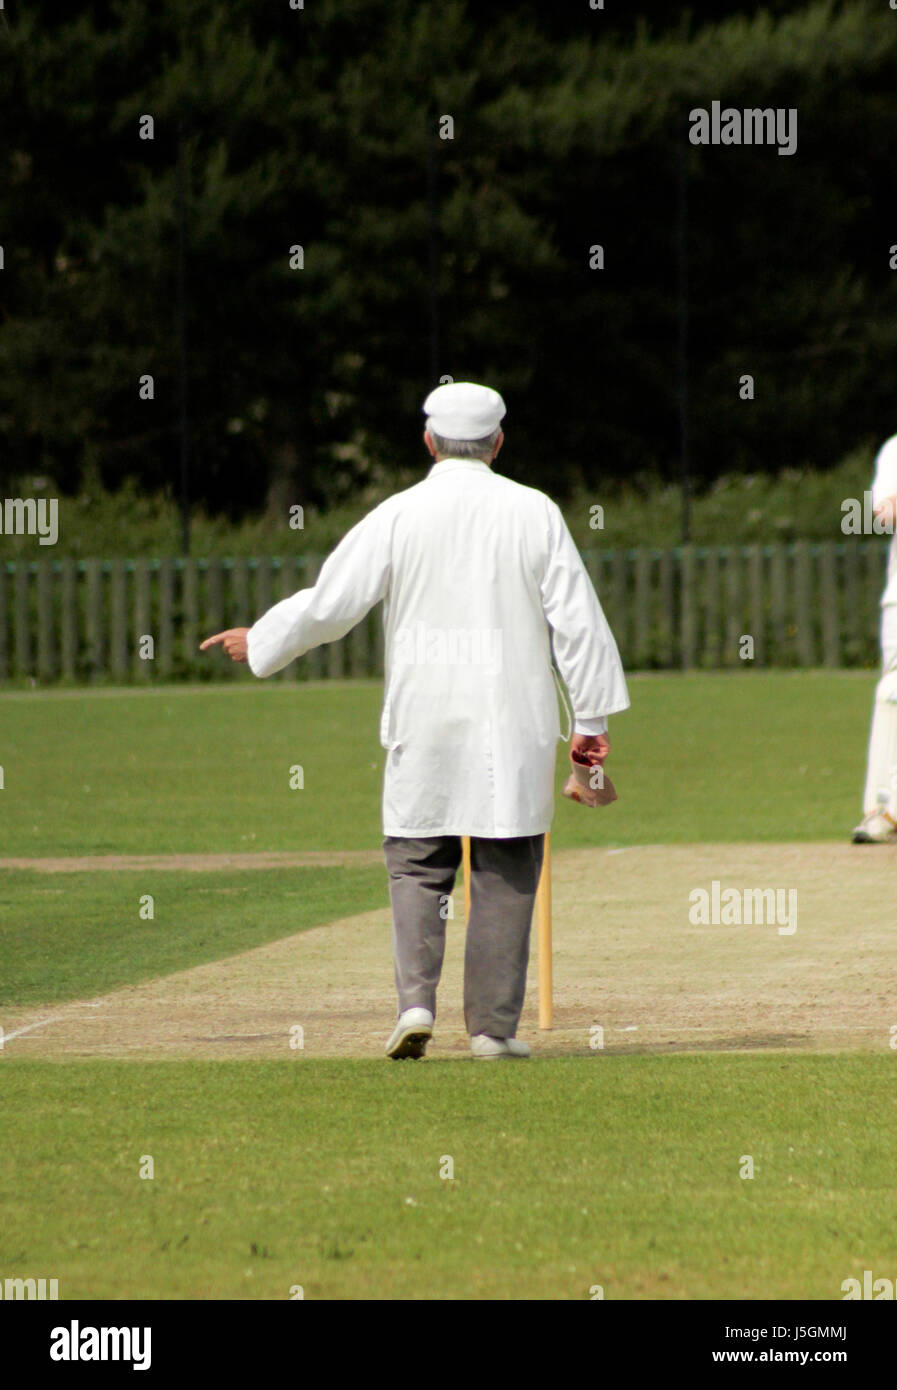 Umpiring an English game of cricket Stock Photo